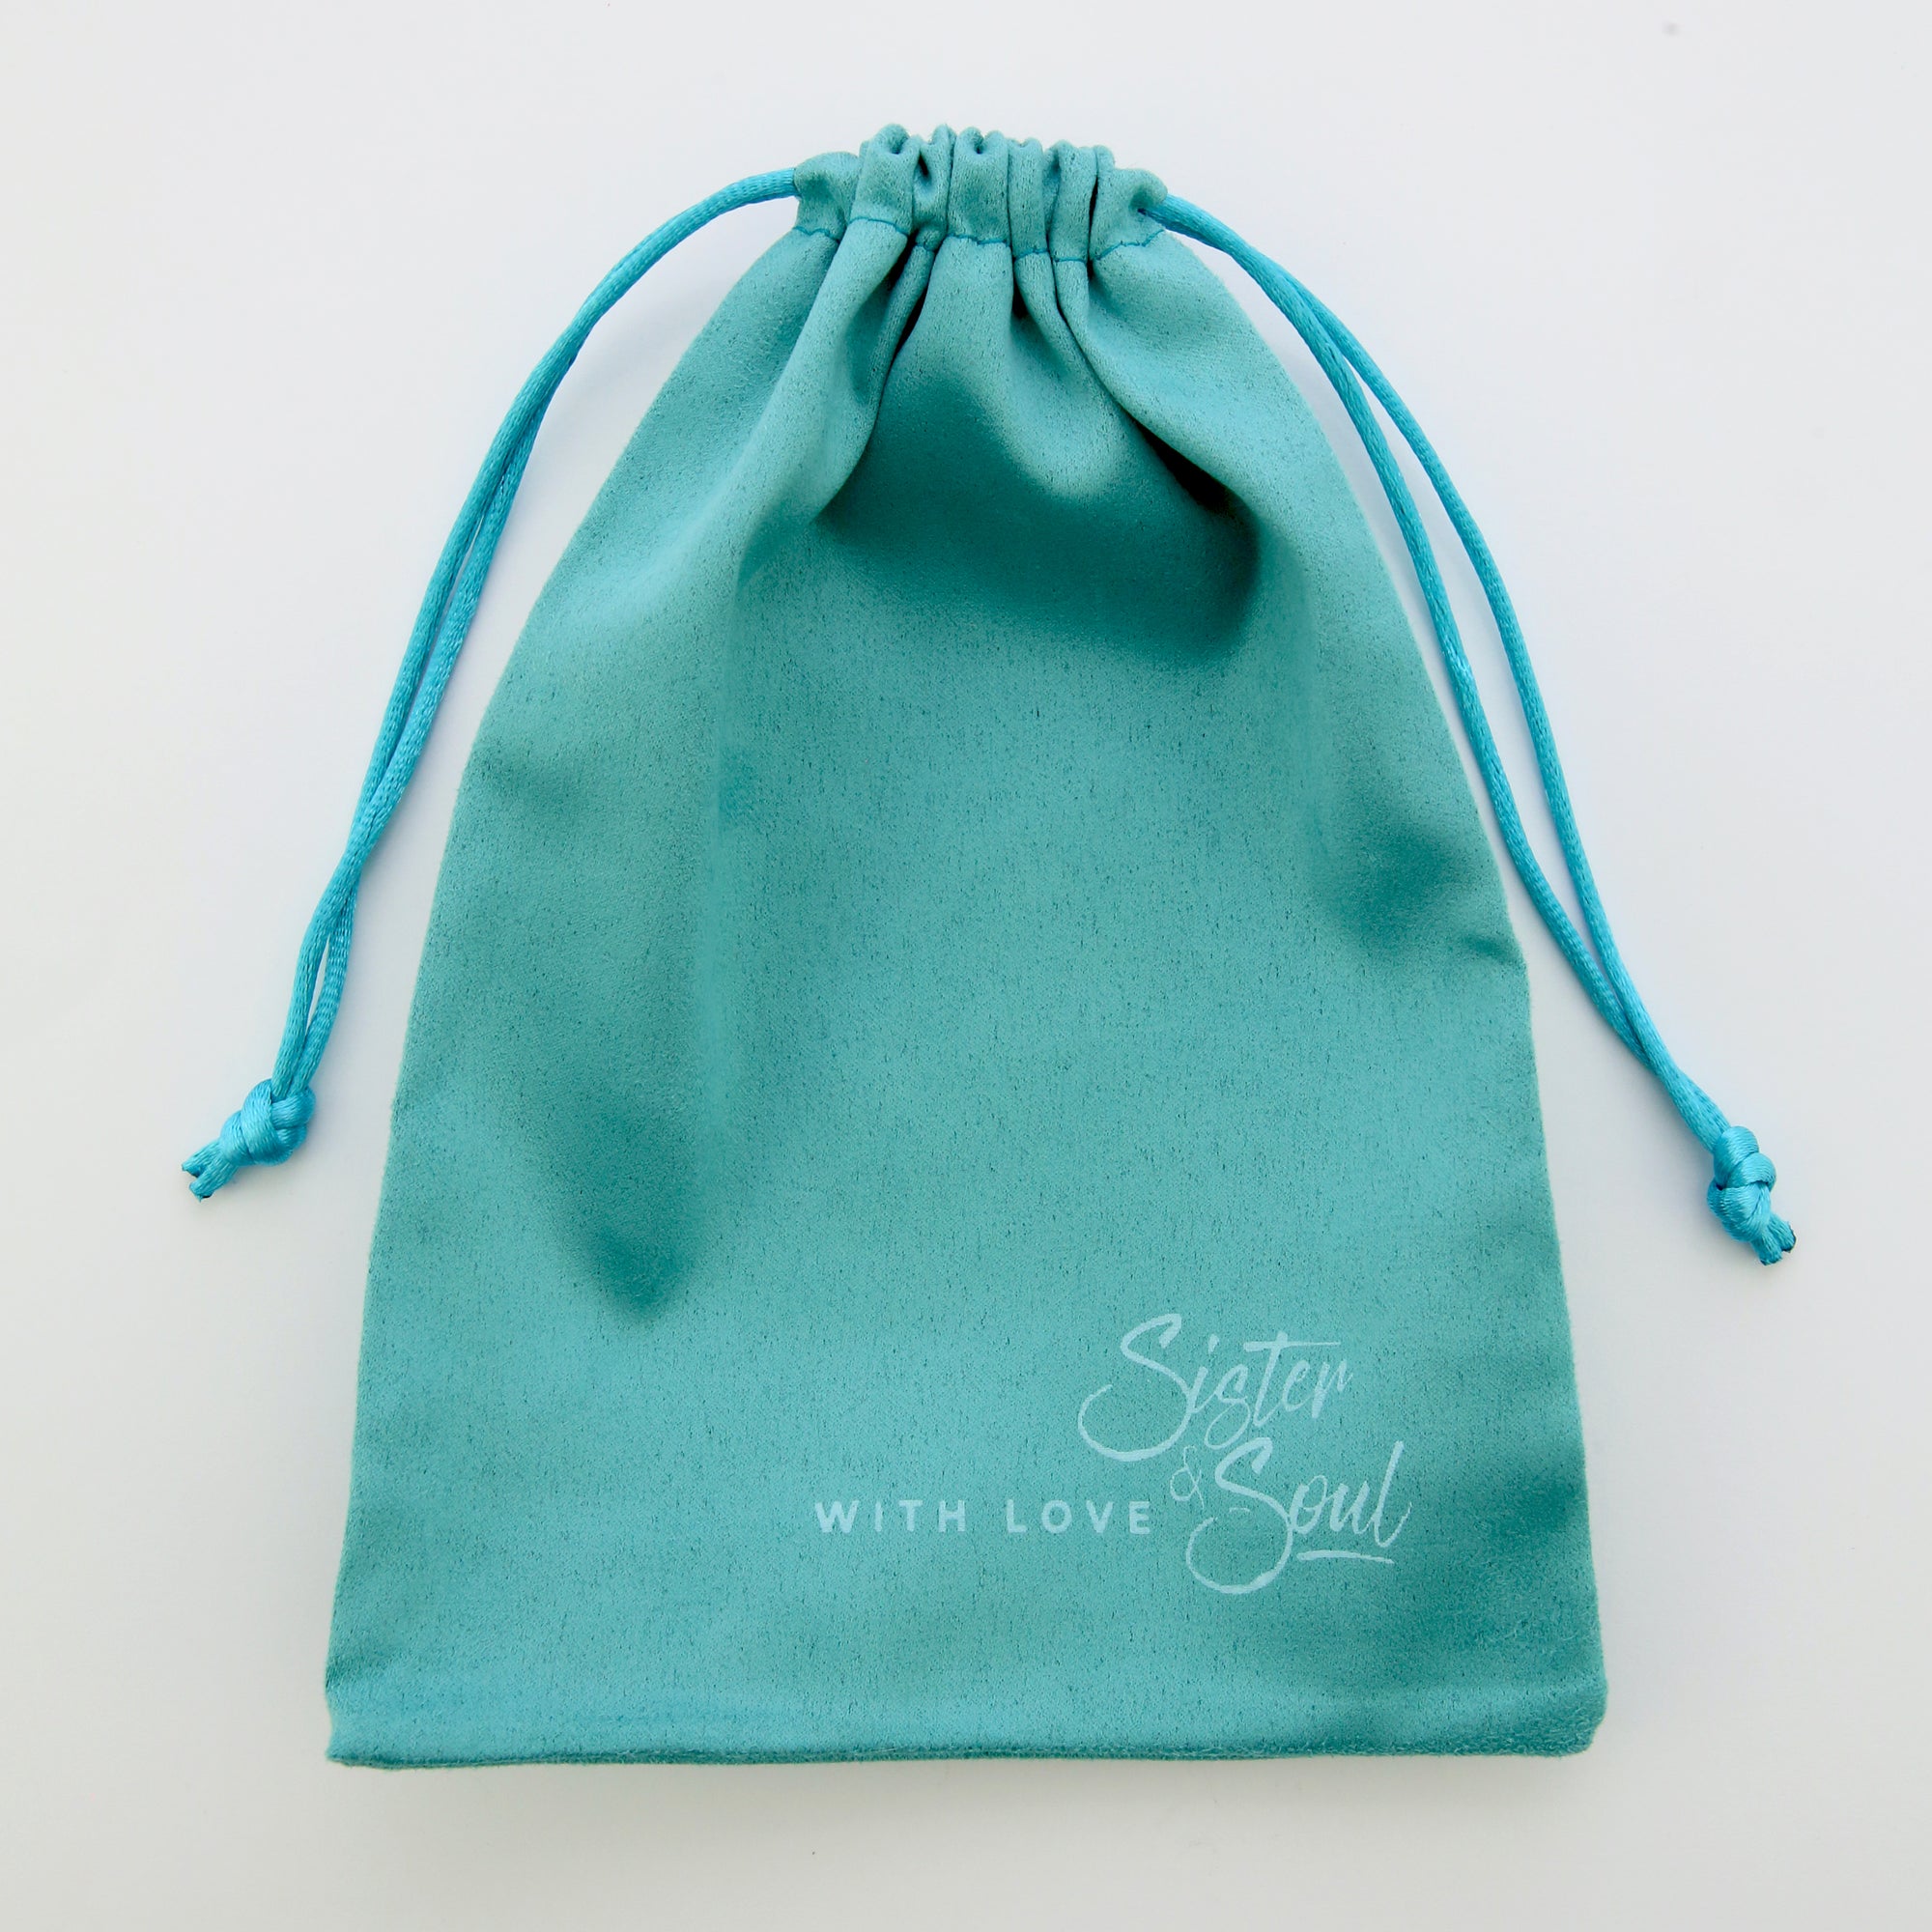 Sister & Soul Teal Gift Bag - Create Your Own Bundle